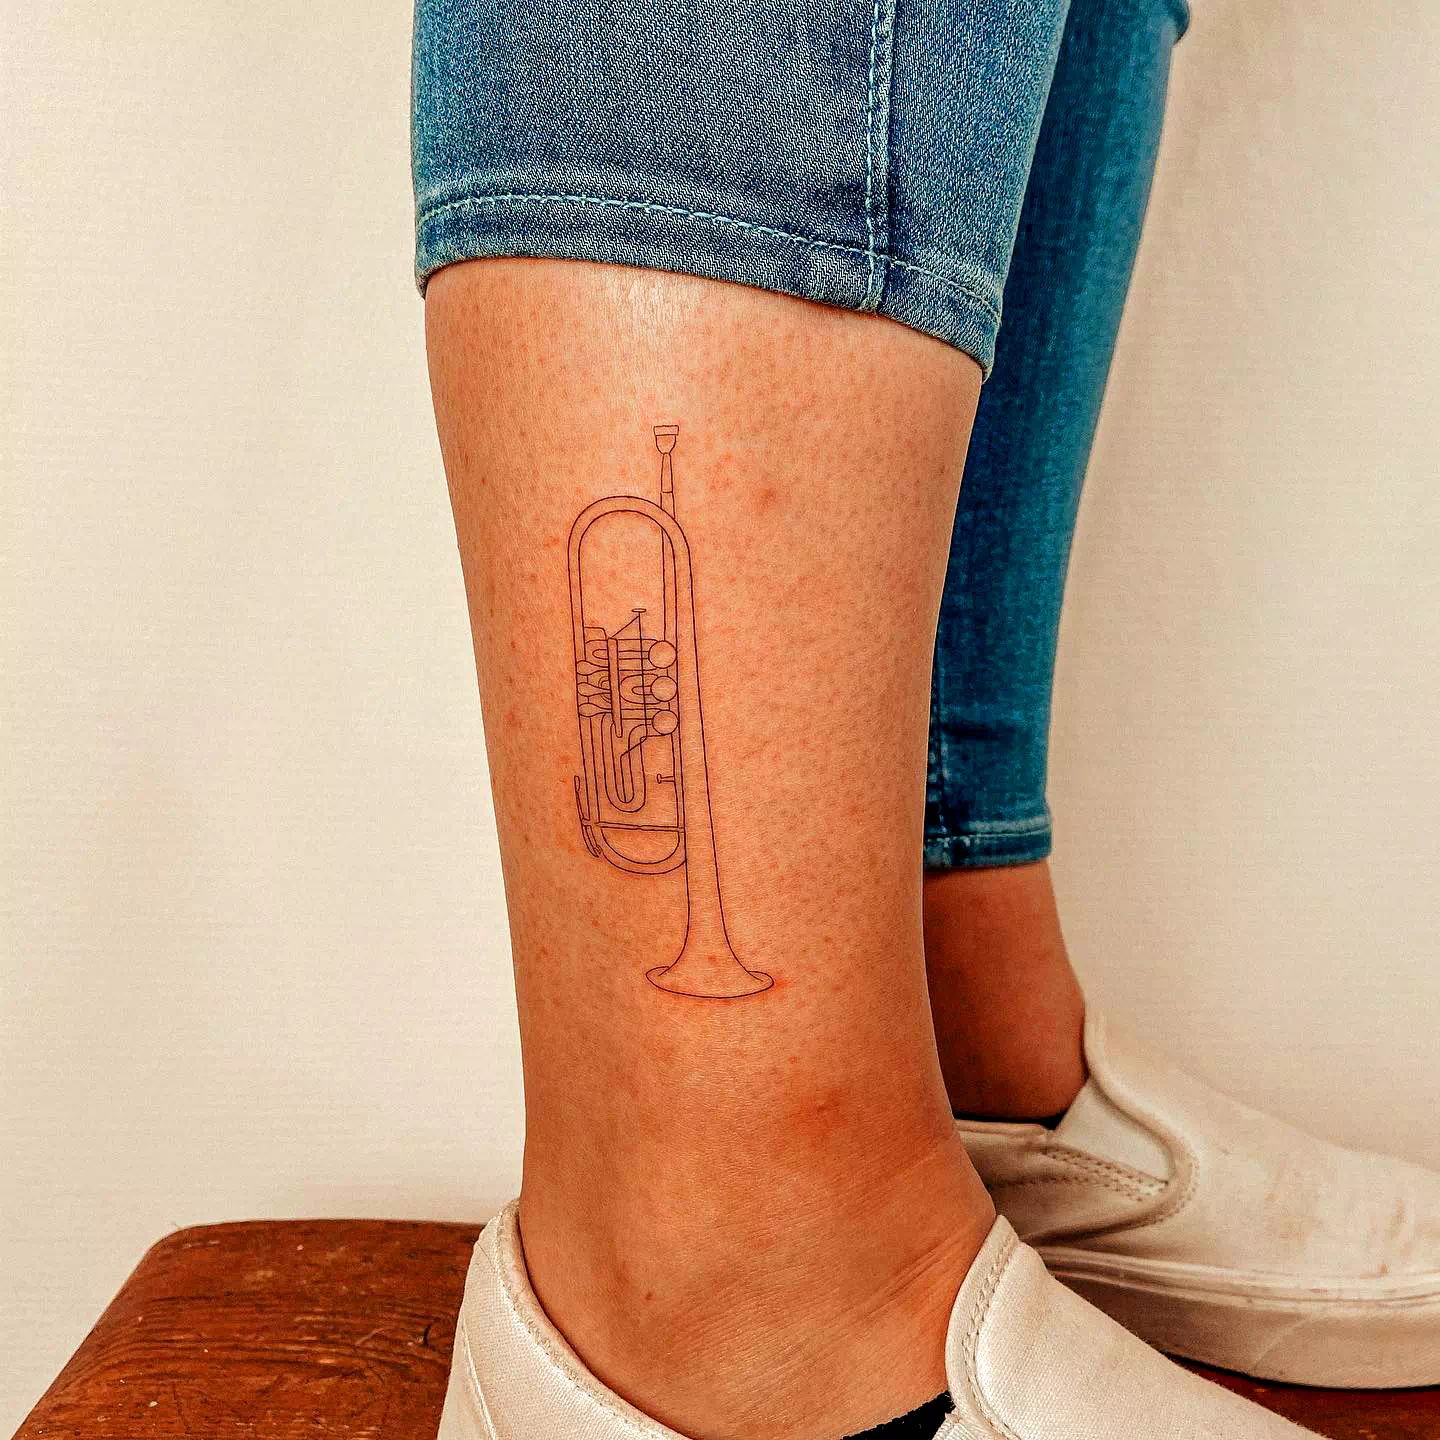 Trumpet Tattoo Design 2